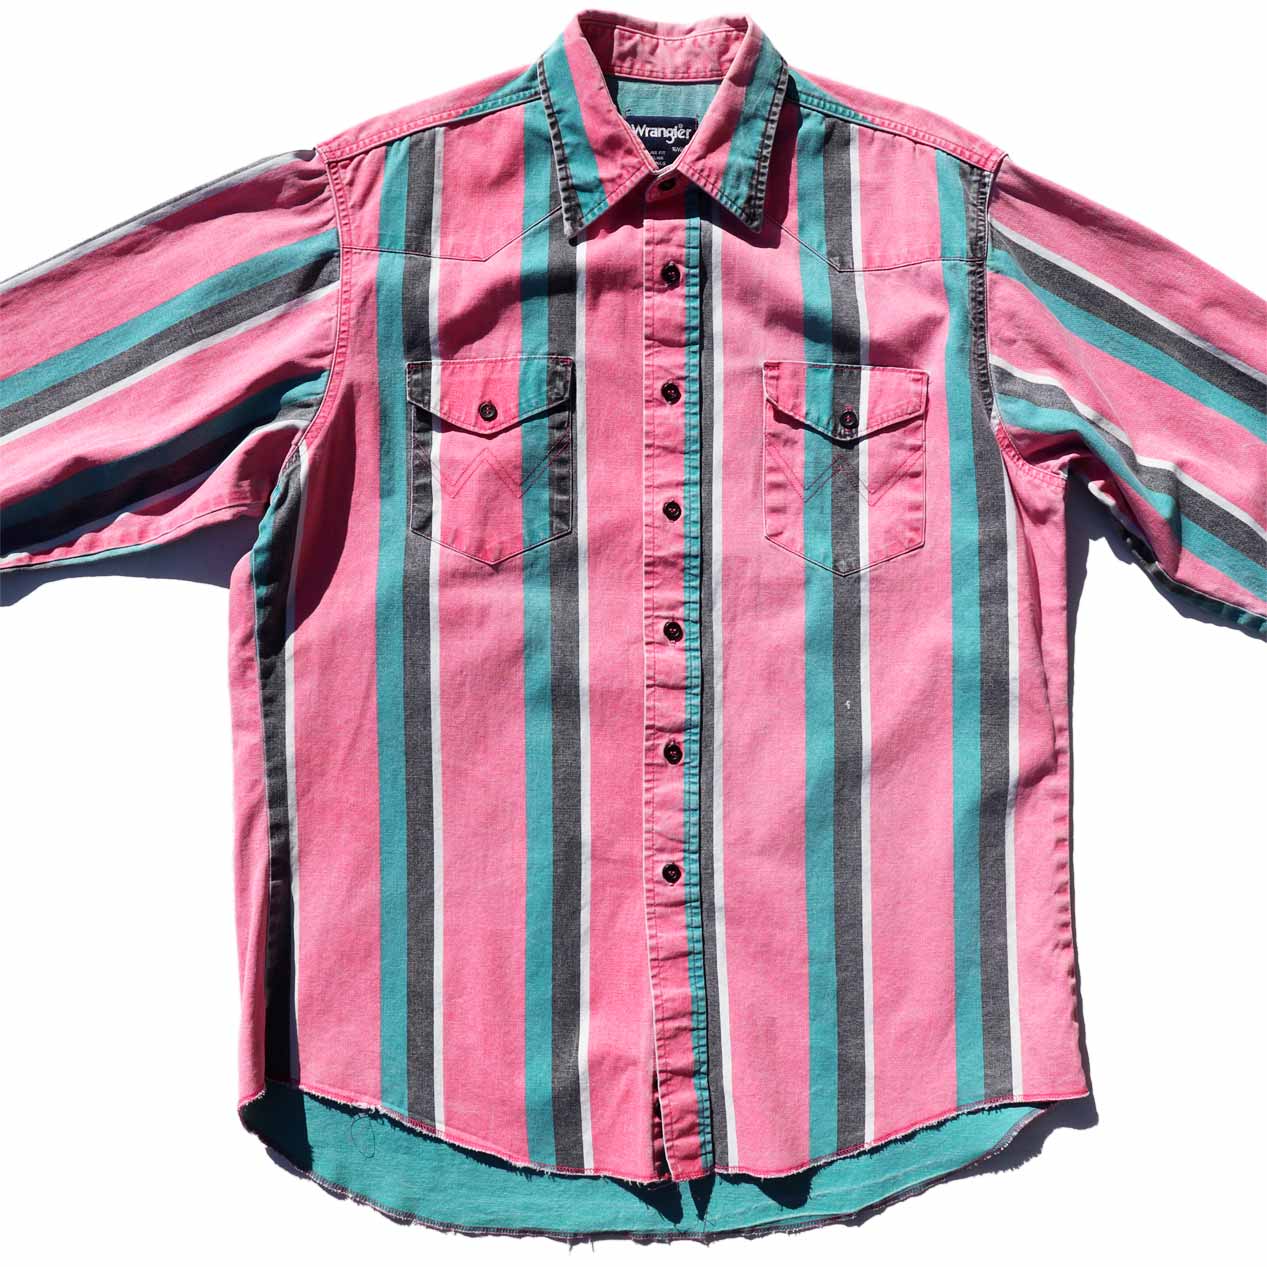 90's Wrangler Western Style Cotton Shirt